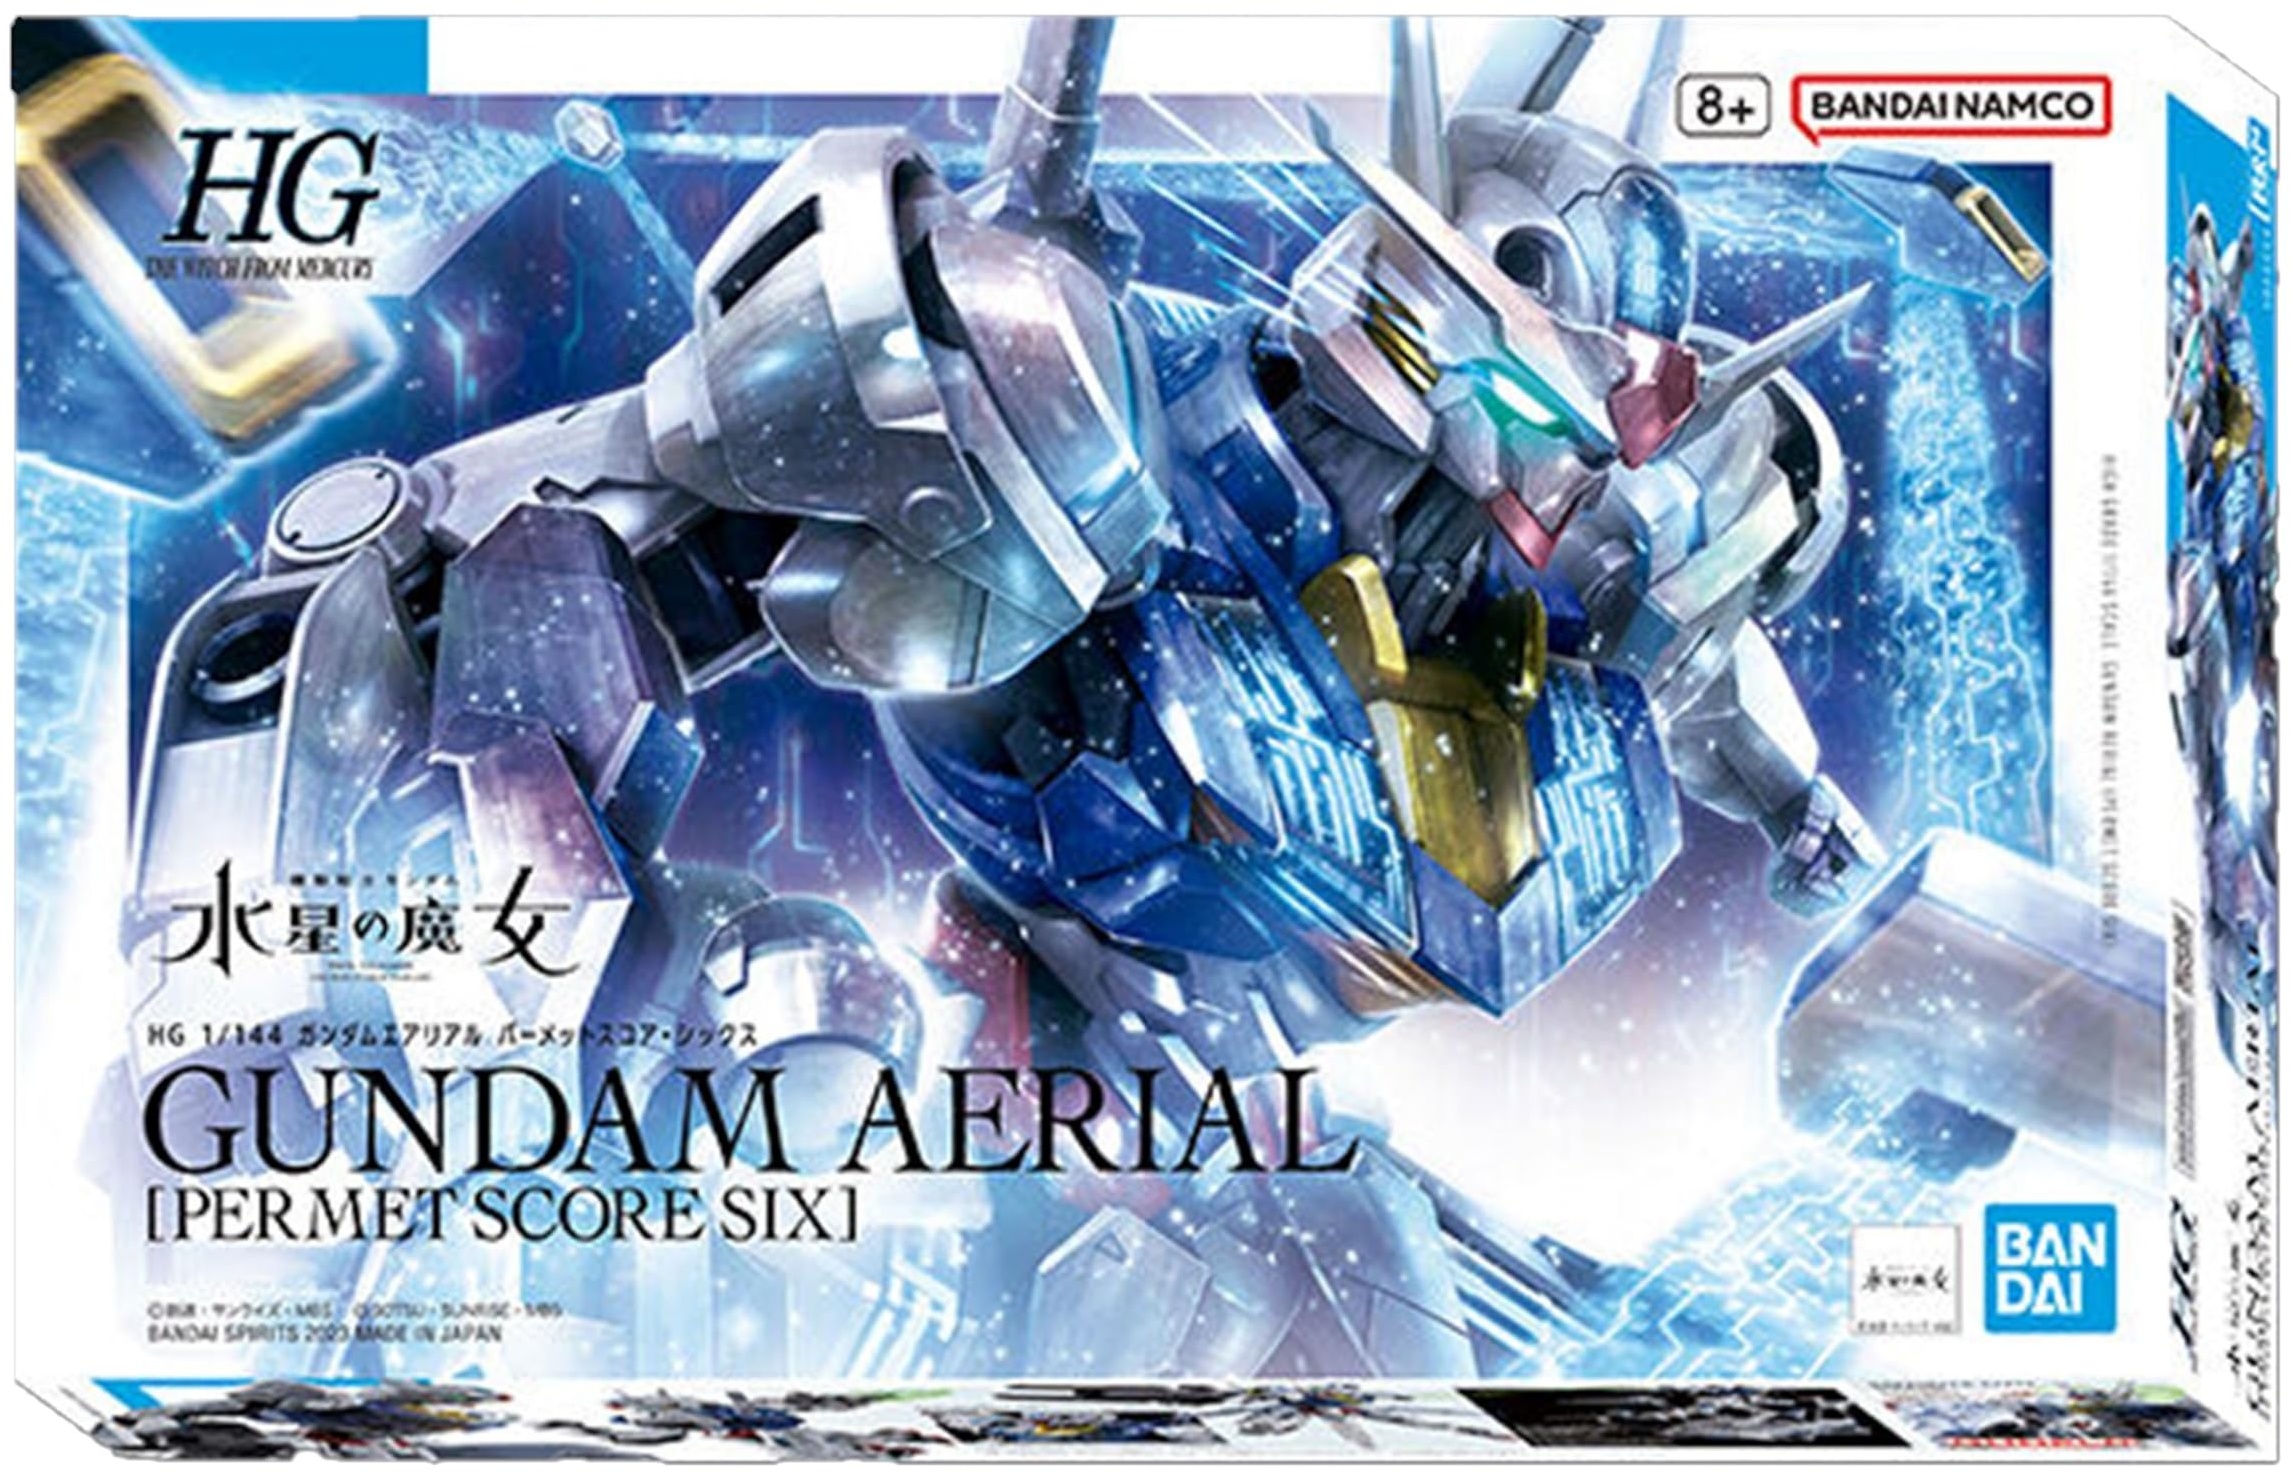 Bandai - Mobile Suit Gundam: The Witch from Mercury - HG 1/144 Gundam Aerial [PERMET Score SIX] Modellbausatz (Japan Import)